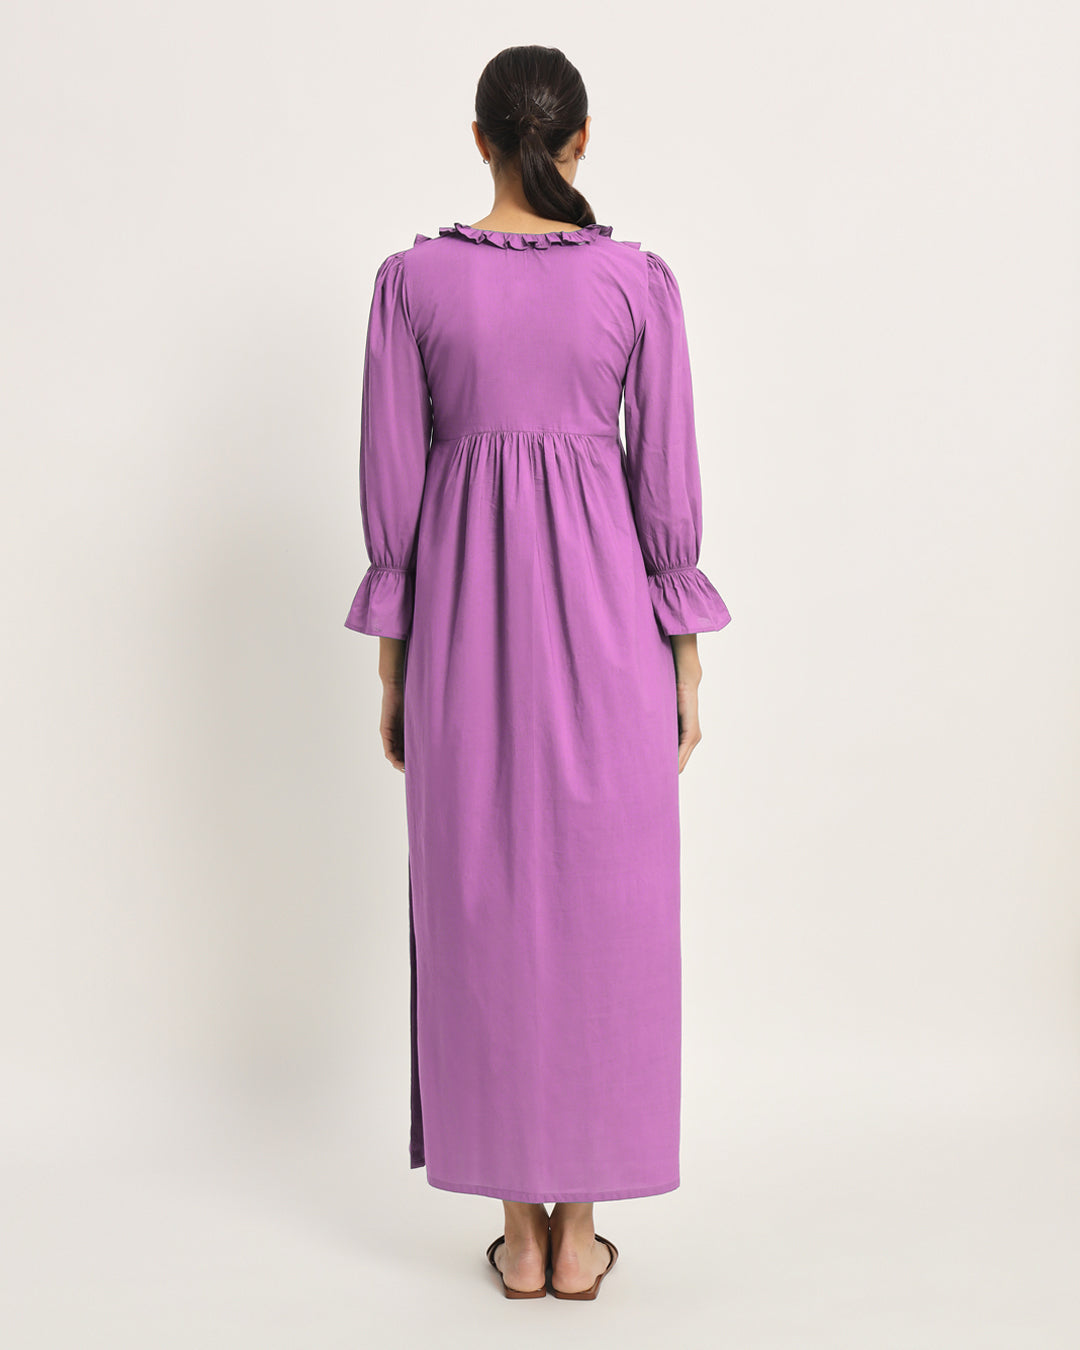 Combo: Lilac & Wisteria Purple Functional Flow Maternity & Nursing Dress - Set of 2